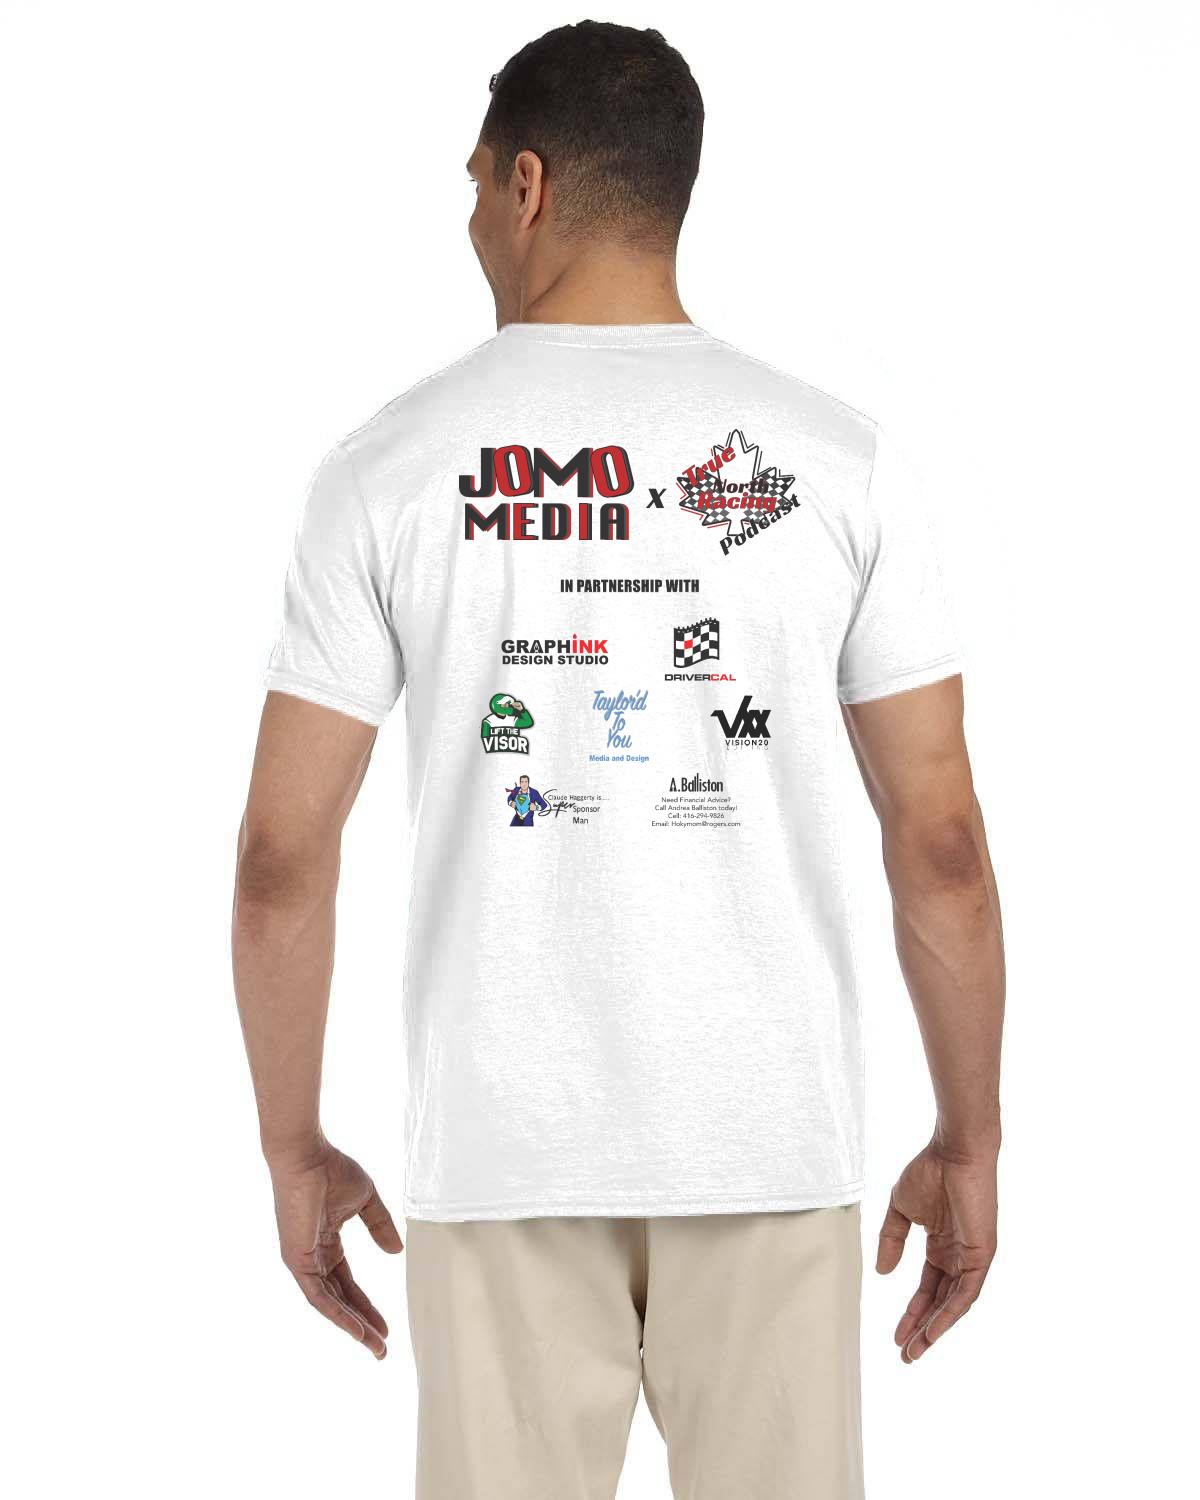 JOMO Media Supporters Men's SoftStyle tshirt